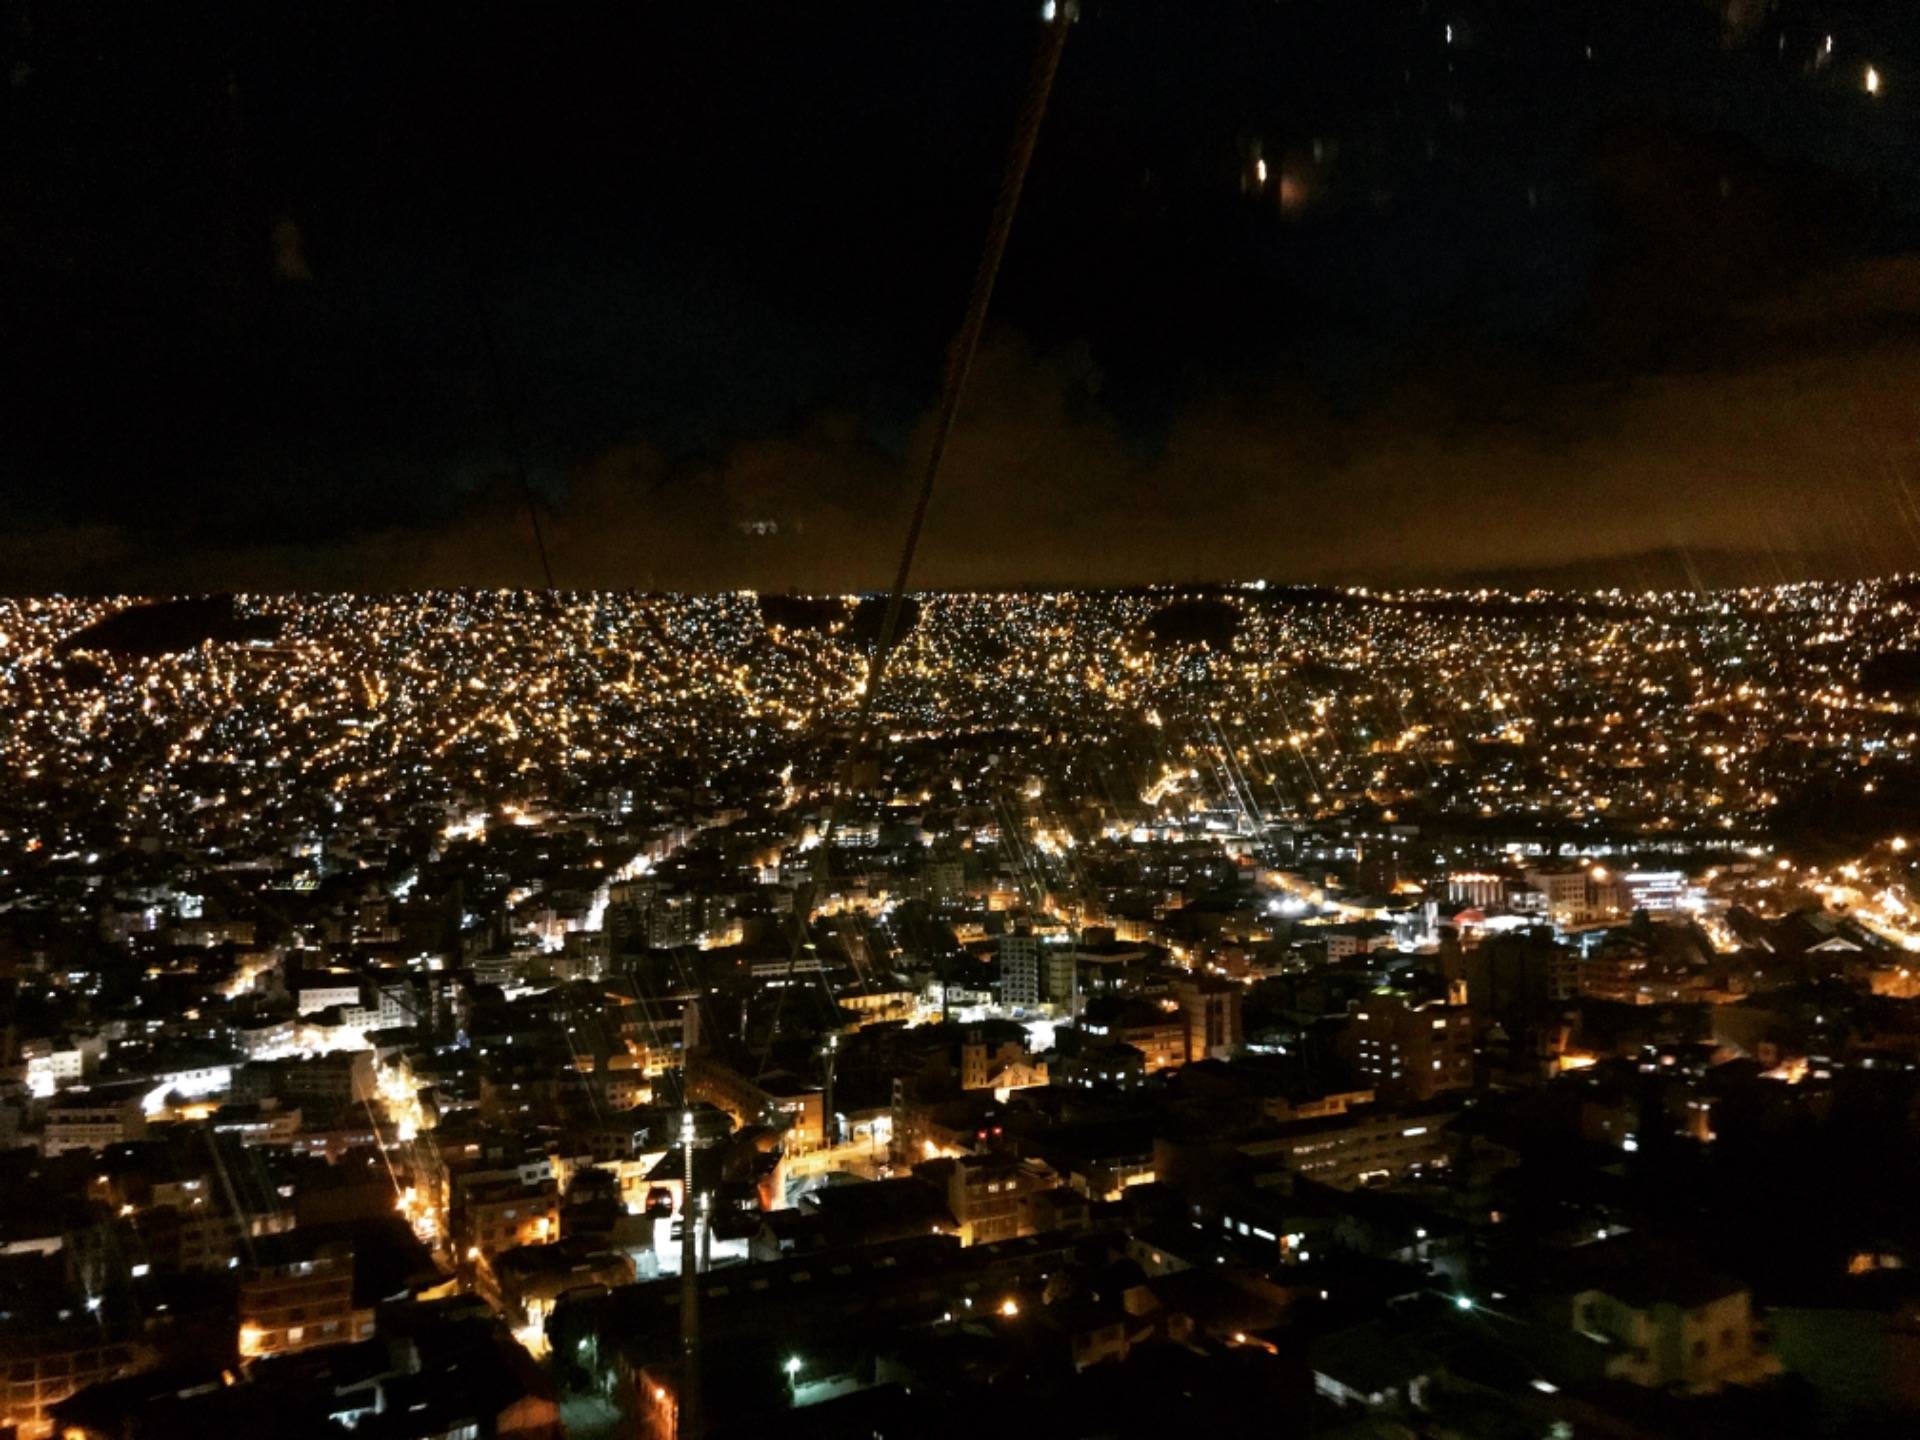 Metro in the sky - Mi Teleférico - La Paz, Bolivia